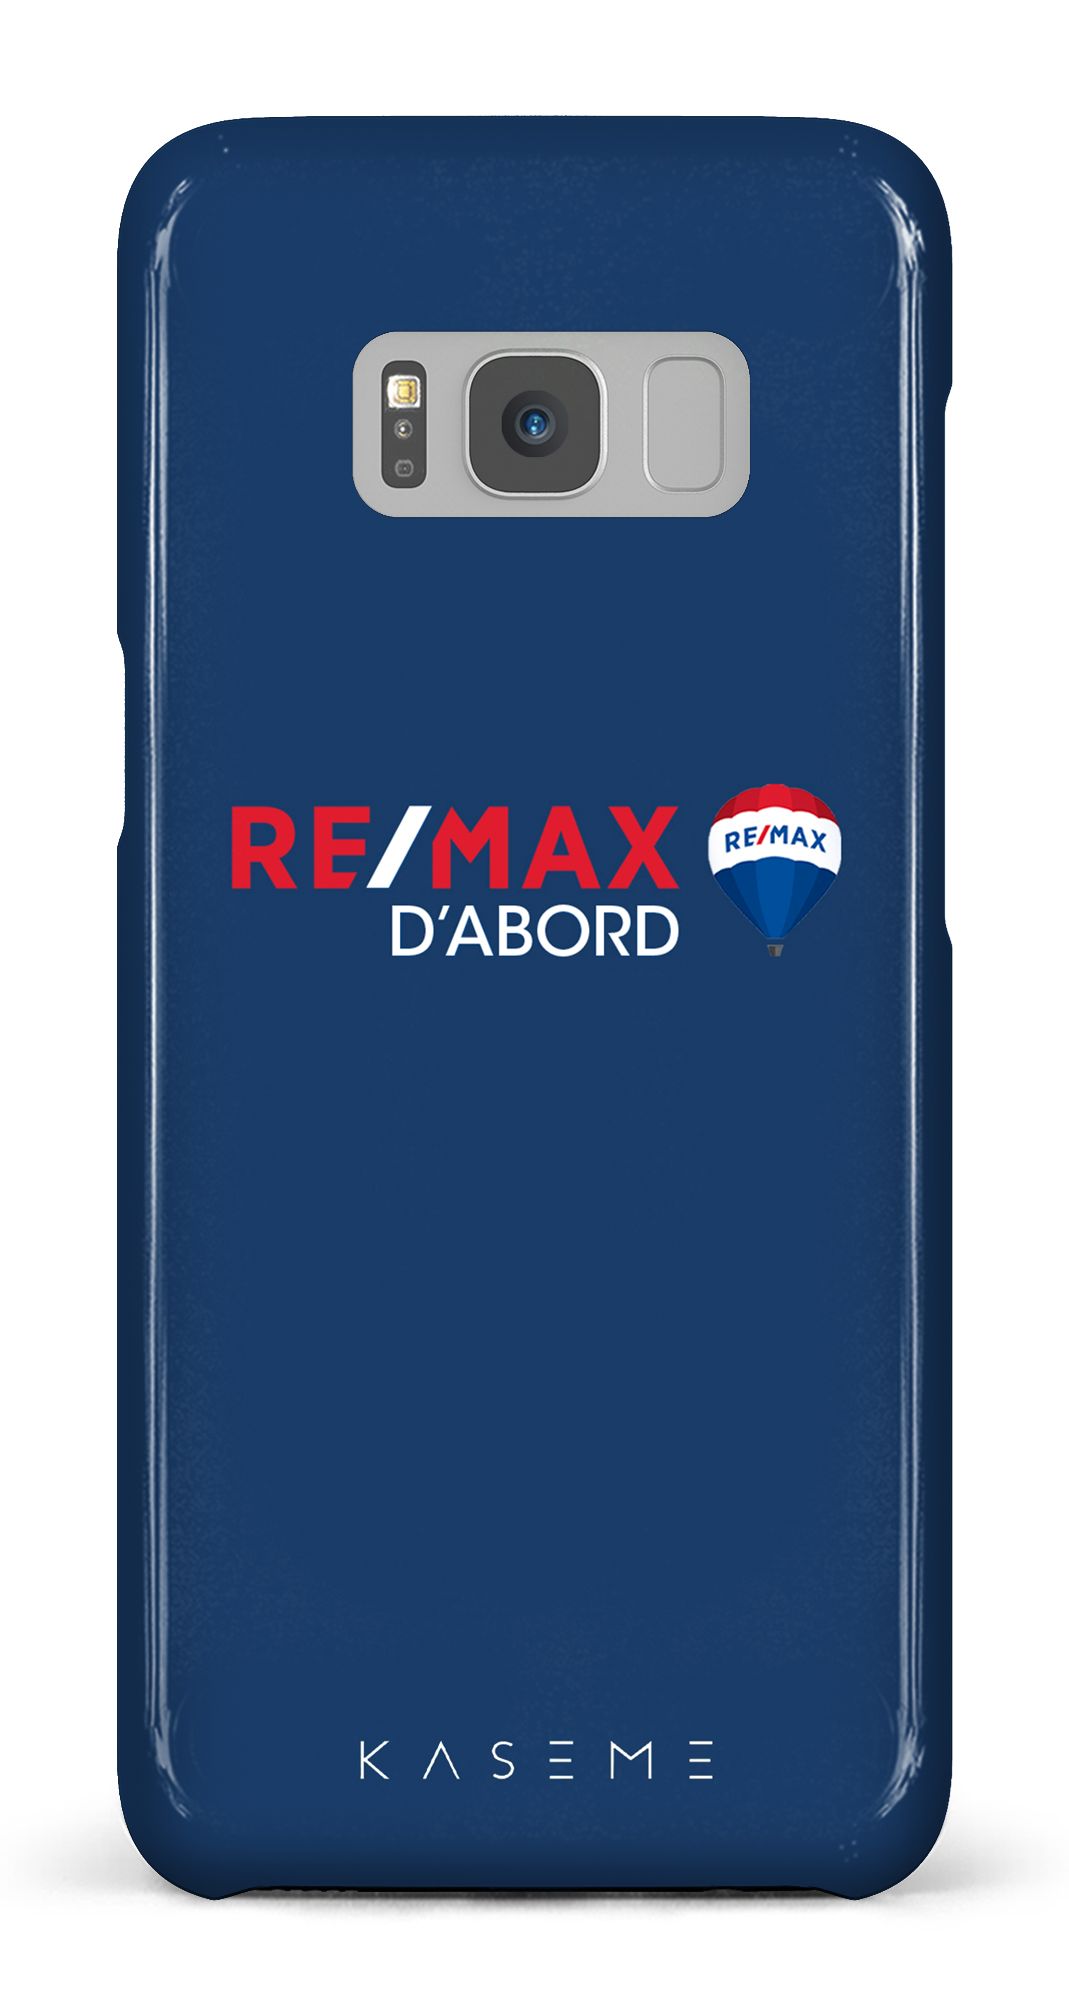 Remax D'abord Bleu - Galaxy S8